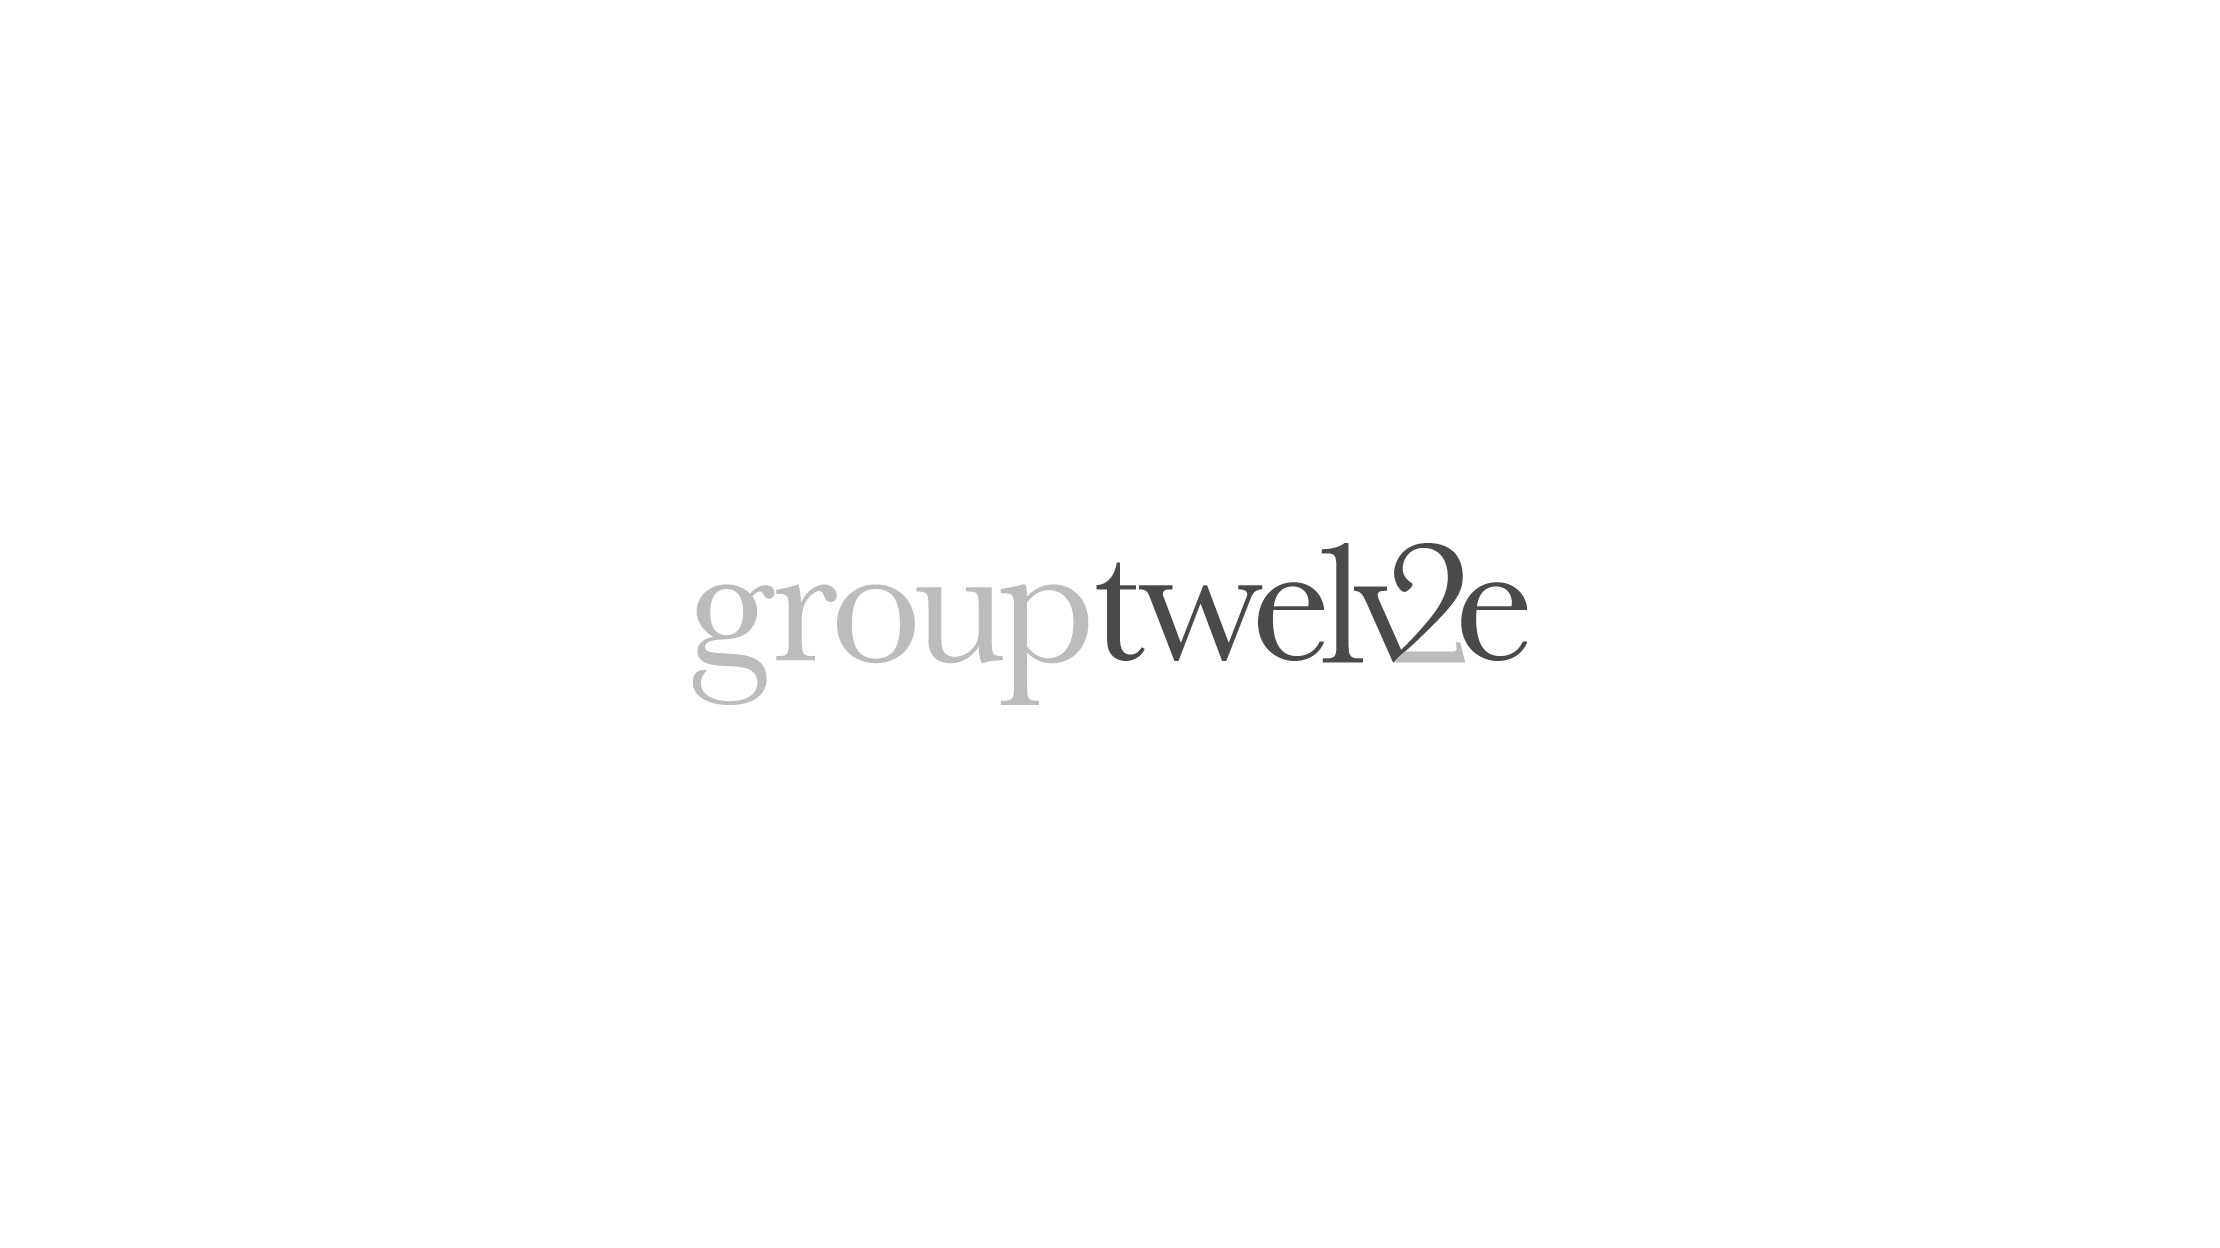 Grouptwelve logo design